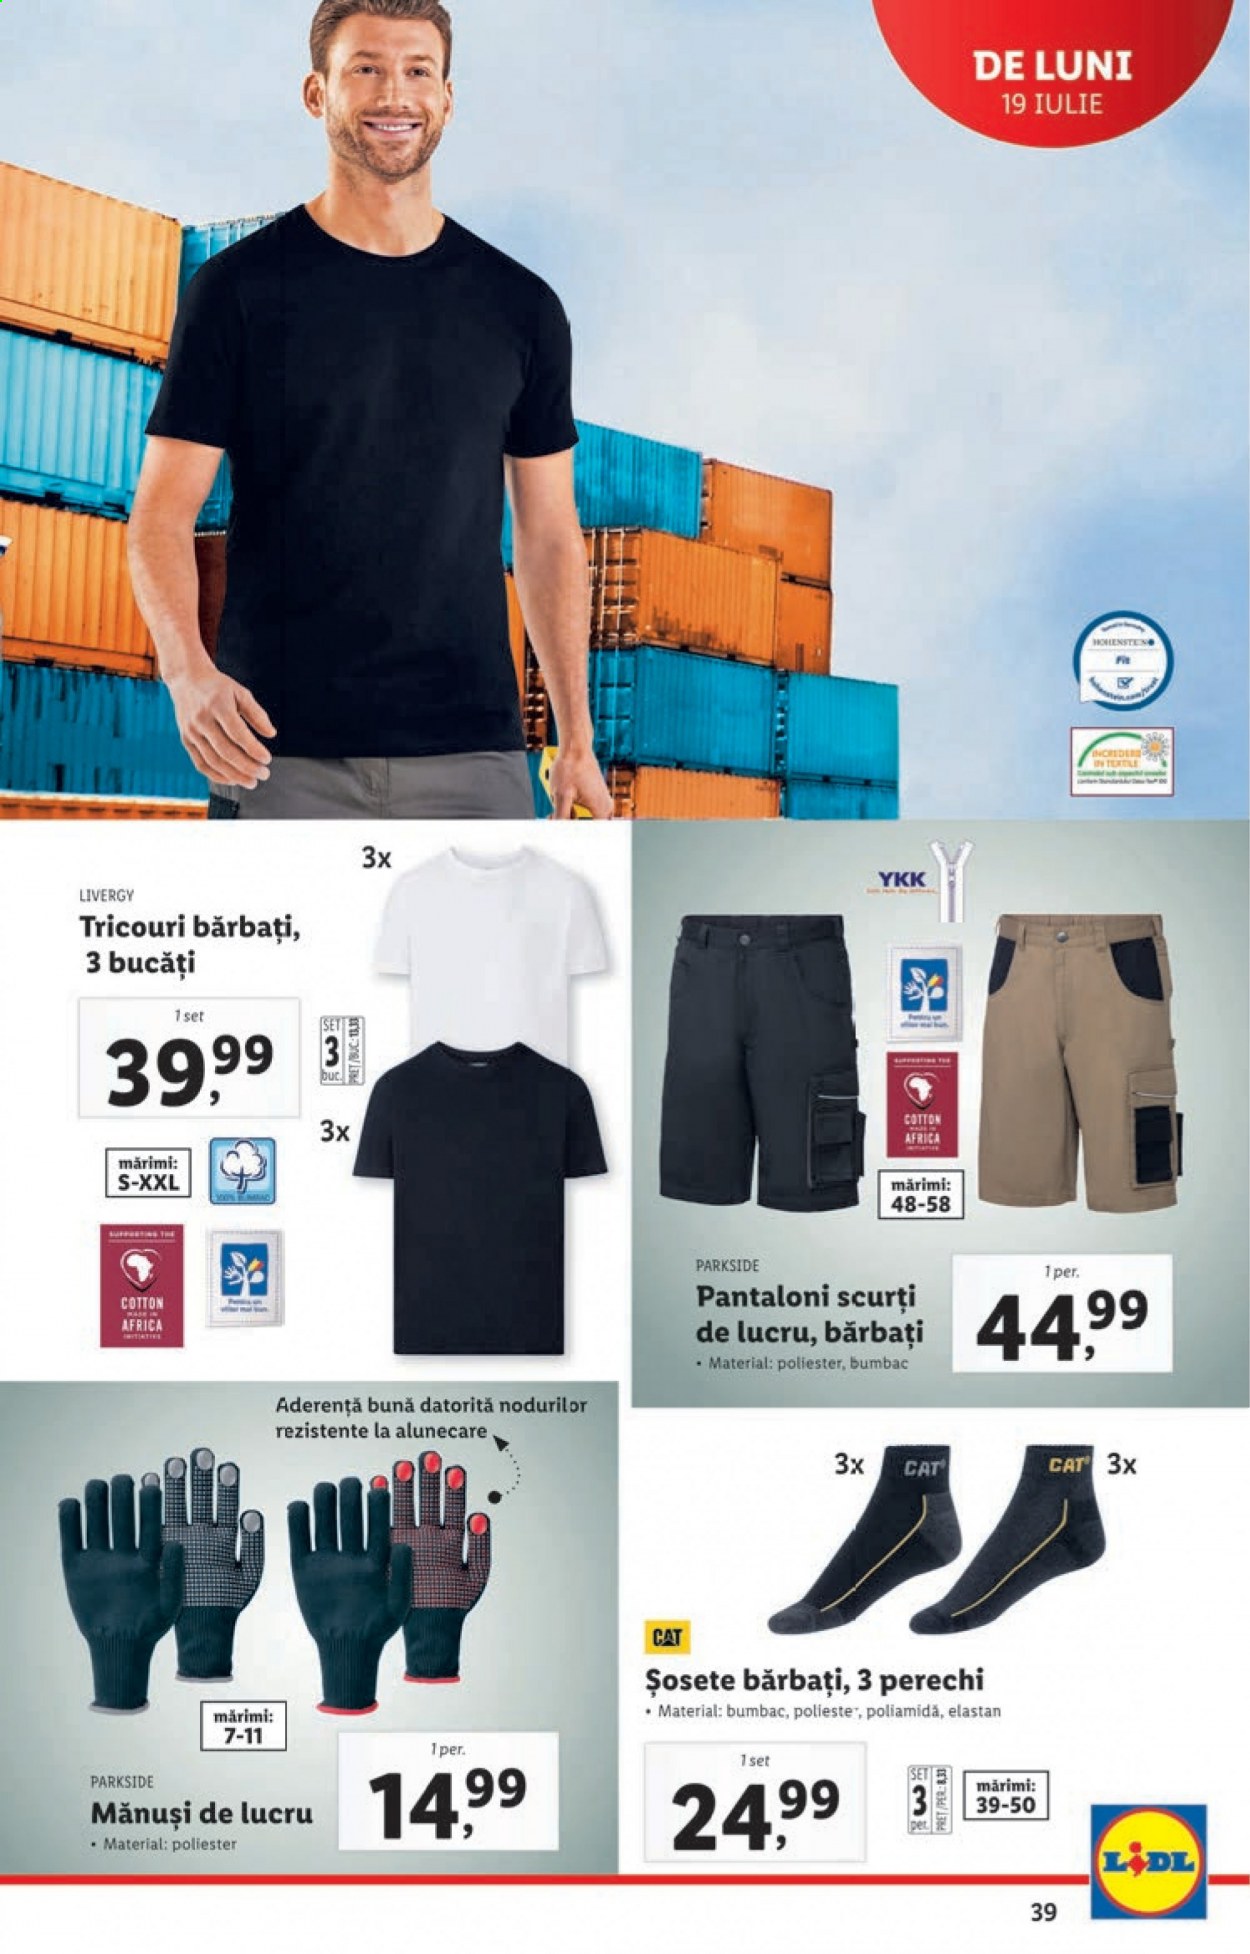 thumbnail - Cataloage Lidl - 19.07.2021 - 25.07.2021 - Produse în vânzare - mănuși, pantalon, pantaloni scurti, șosete. Pagina 39.